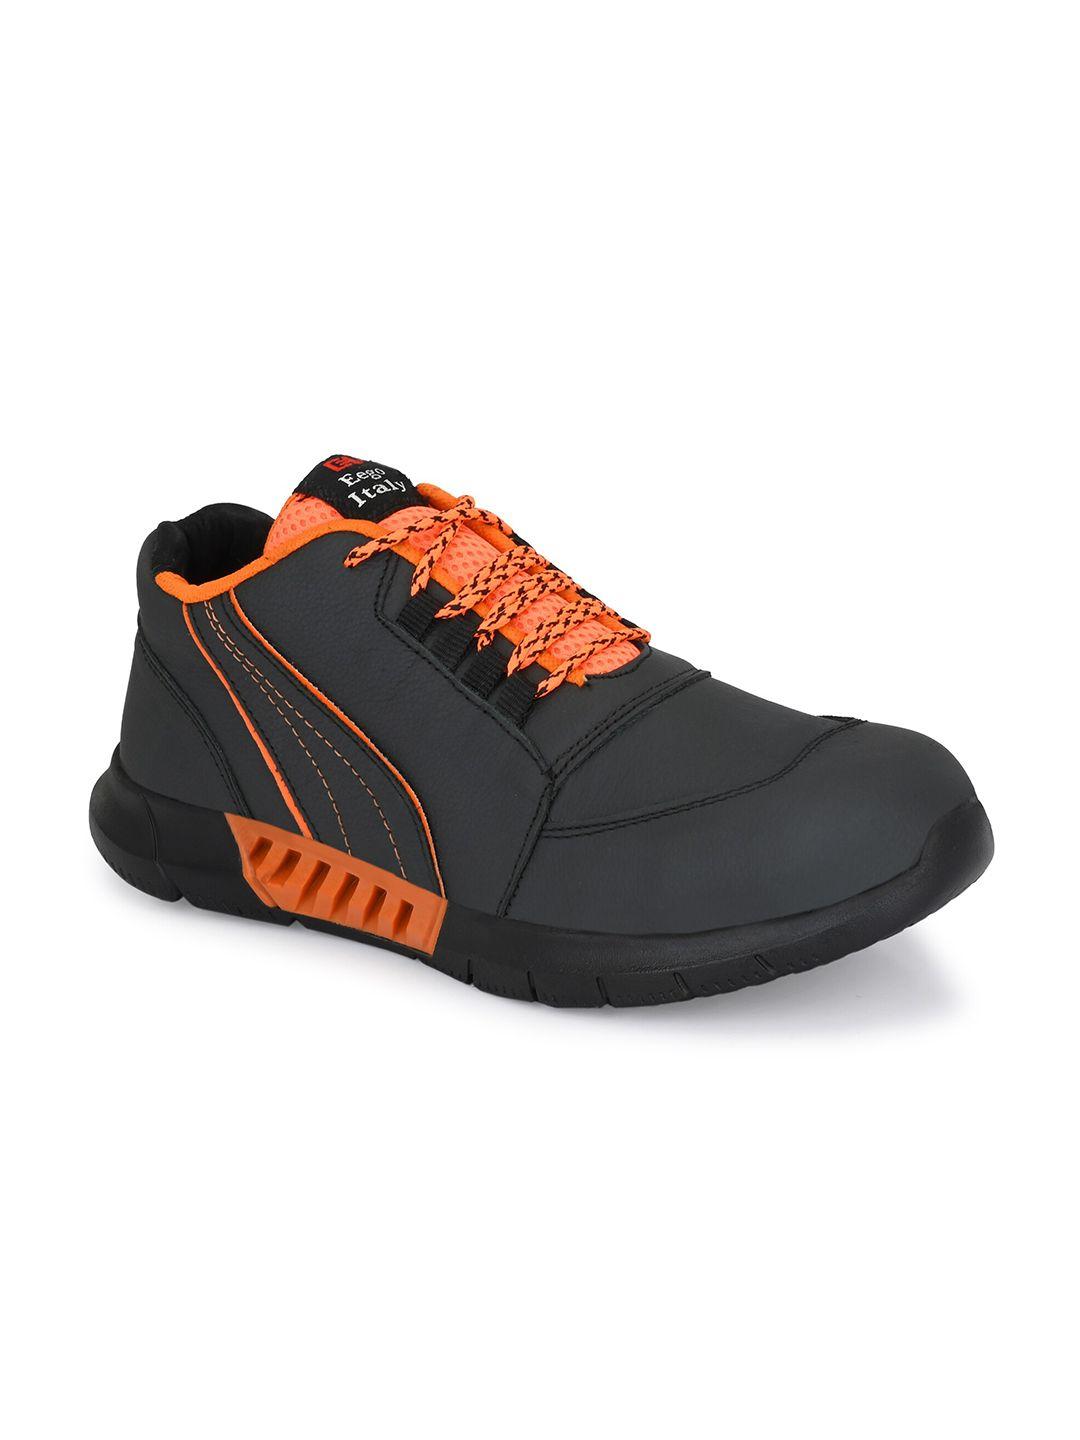 eego italy men orange & black leather trekking non-marking shoes